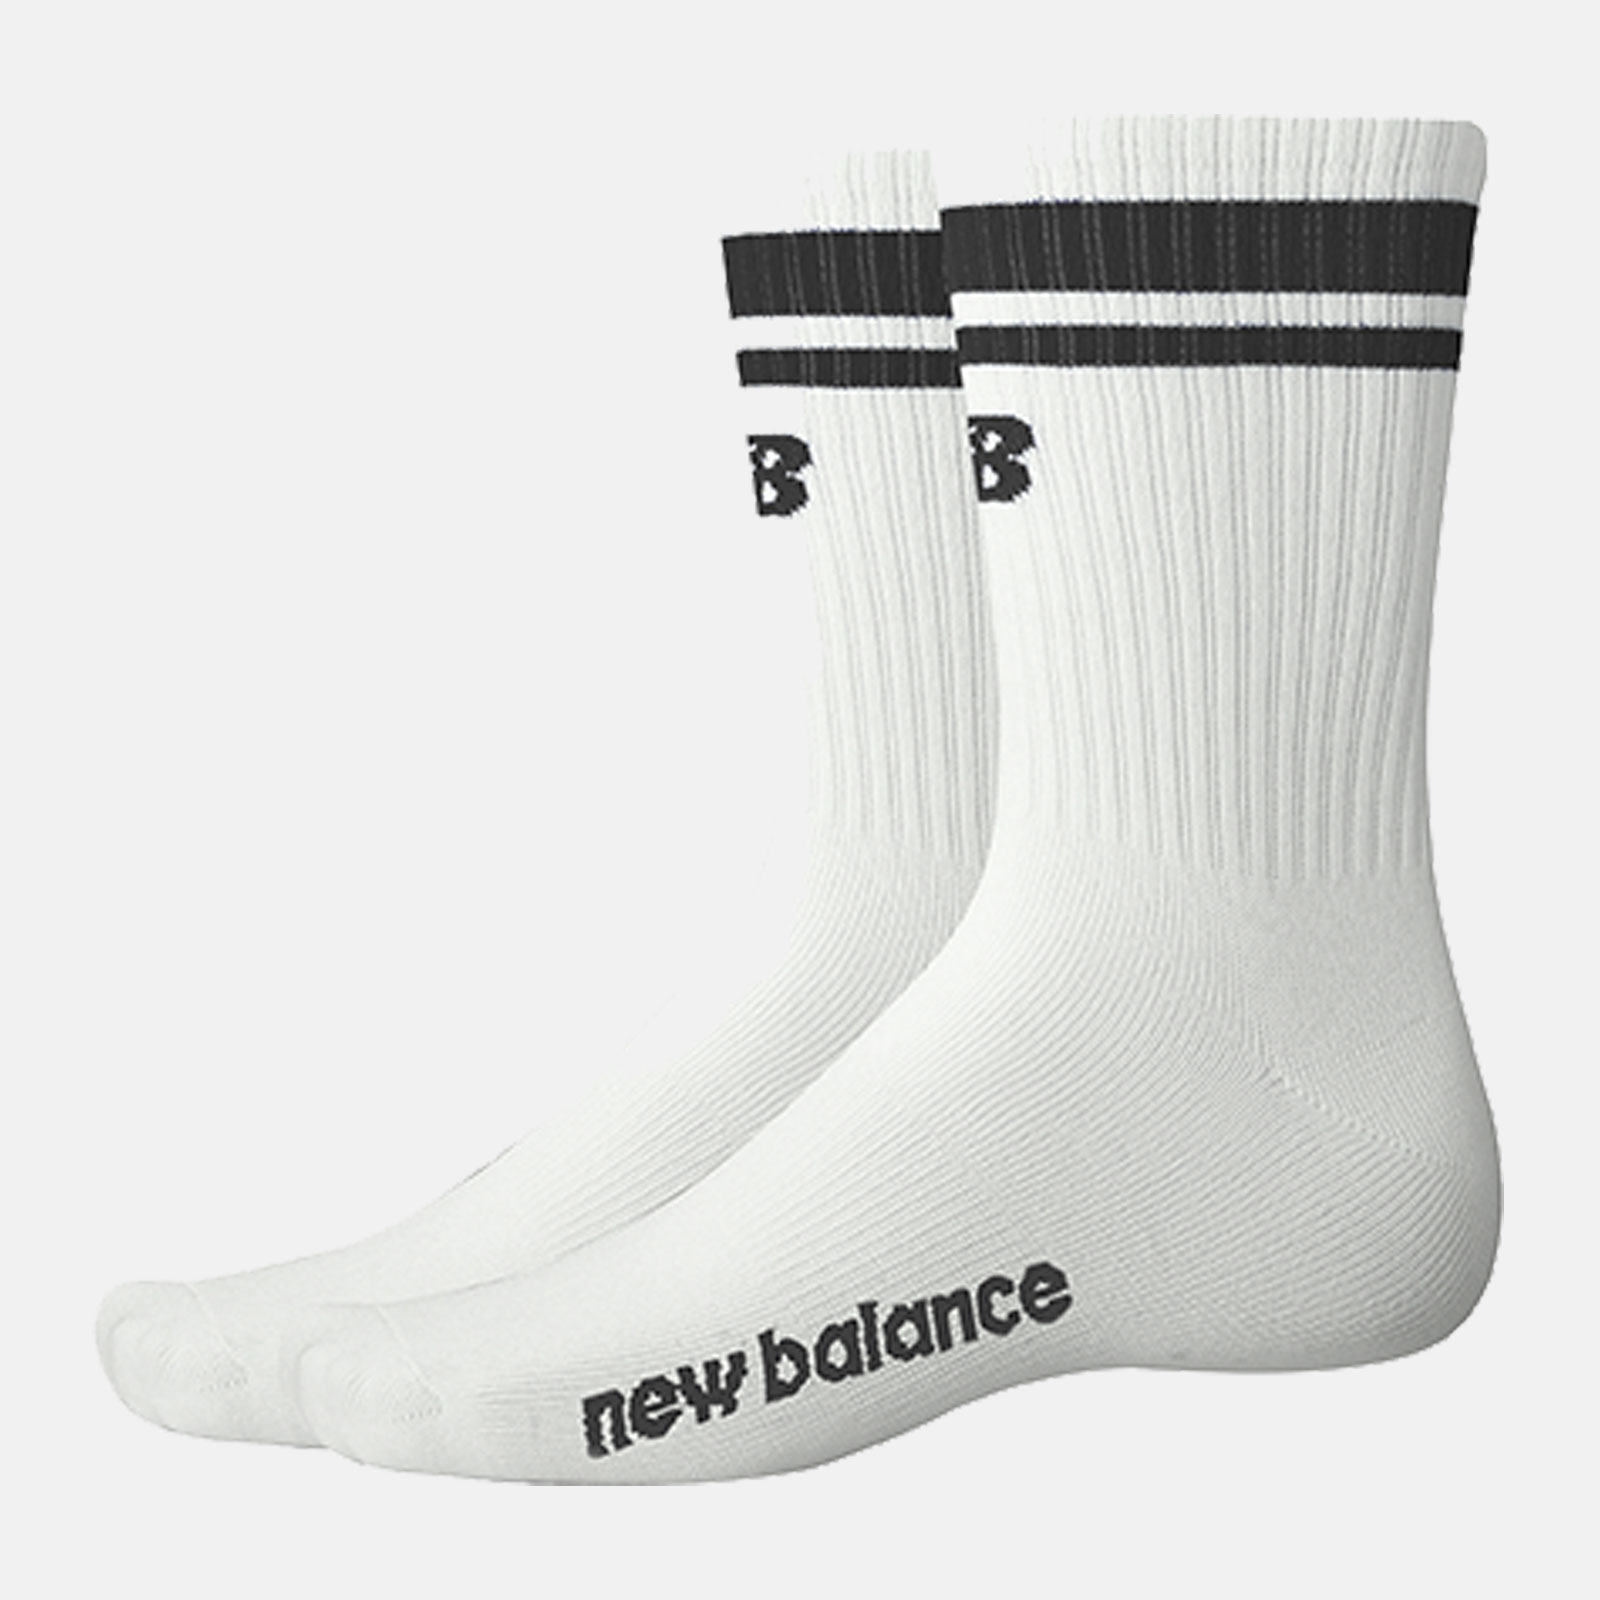 New Balance Medias Lifestyle Essentials Line LASA32163, White/Black, swatch